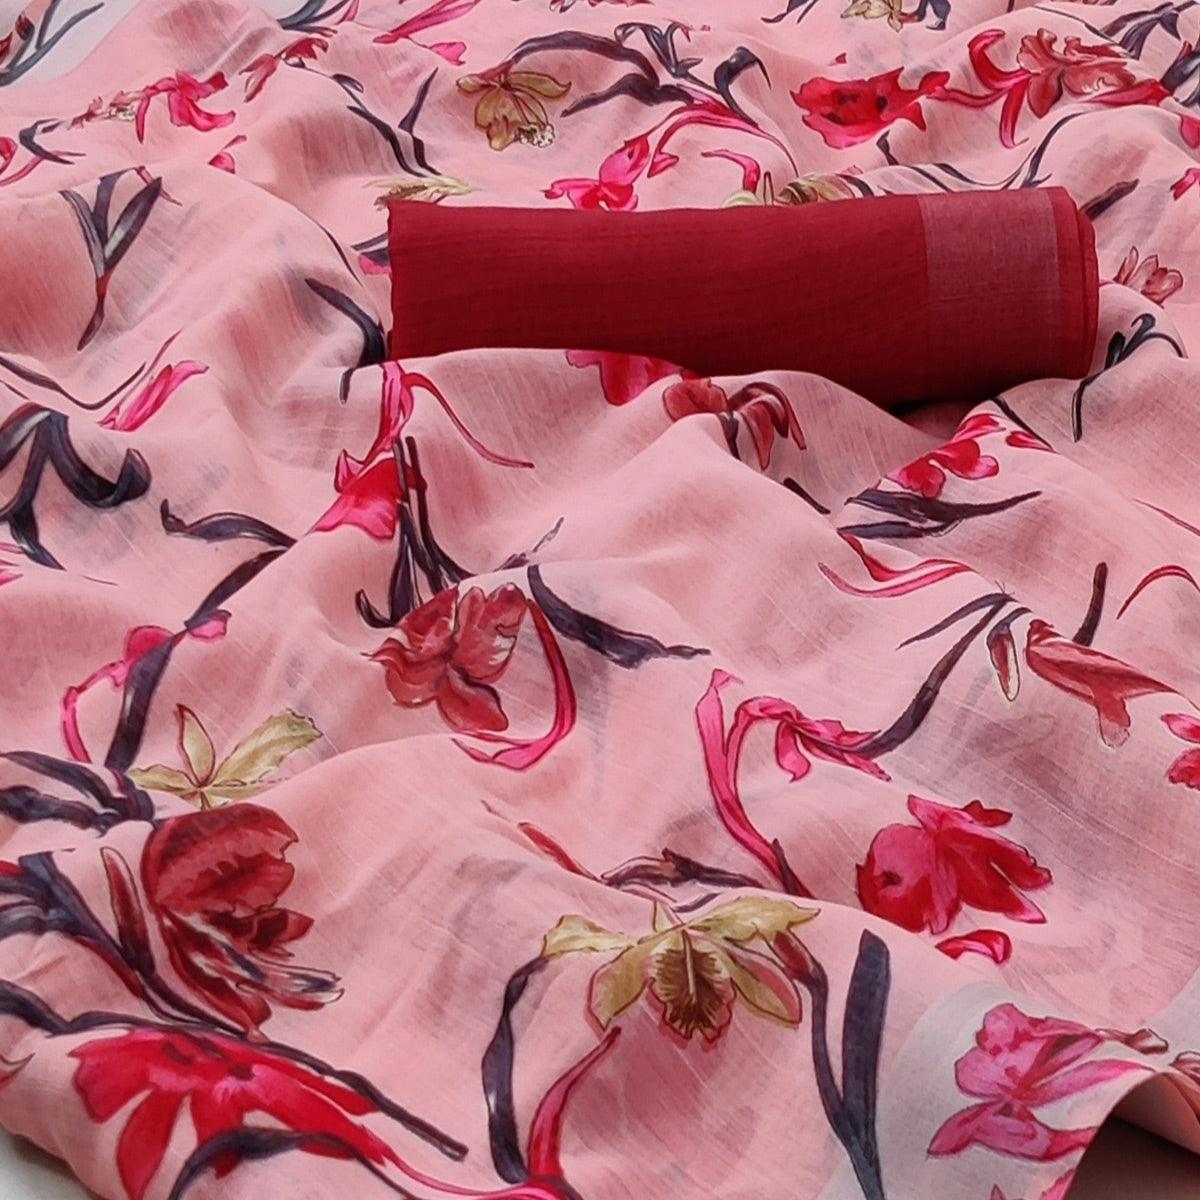 Peach Casual Wear Floral Printed Linen Saree With Silver Border - Peachmode